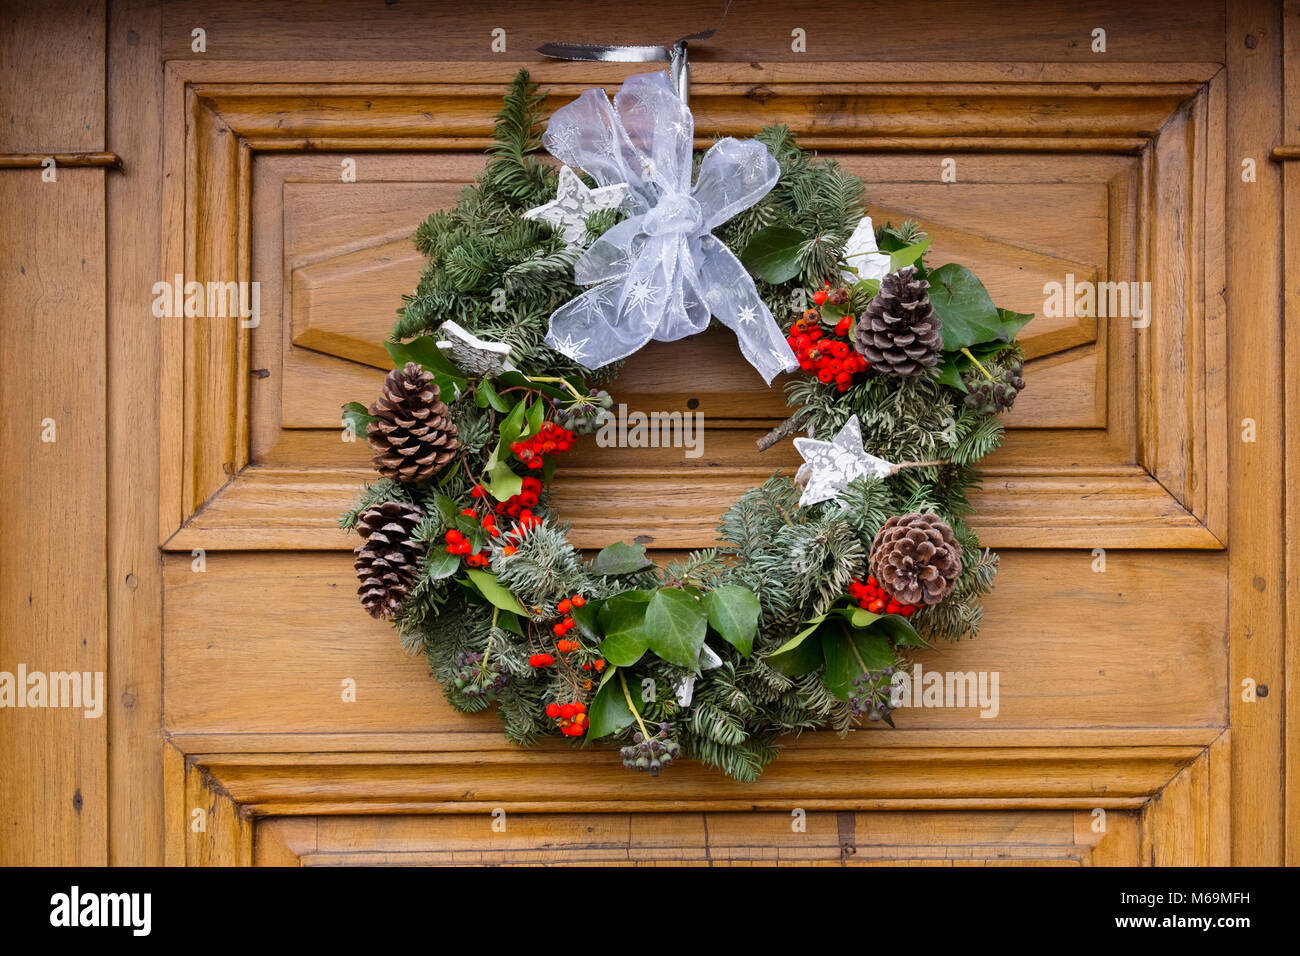 Geneva Christmas Stockfotos und -bilder Kaufen - Alamy